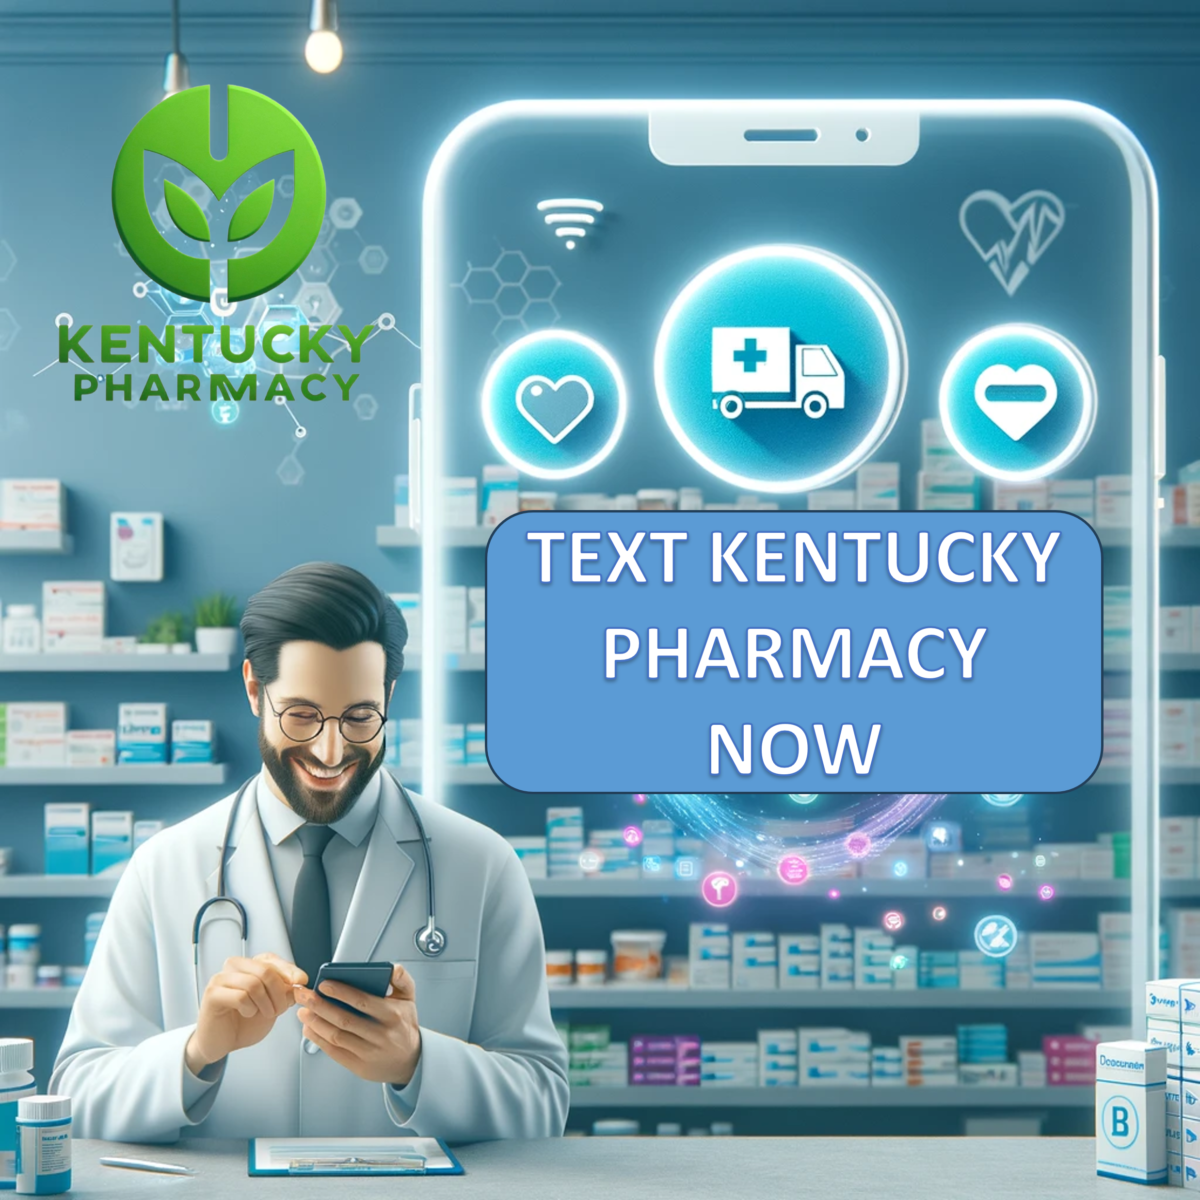 Kentucky Pharmacy - Text our pharmacist now